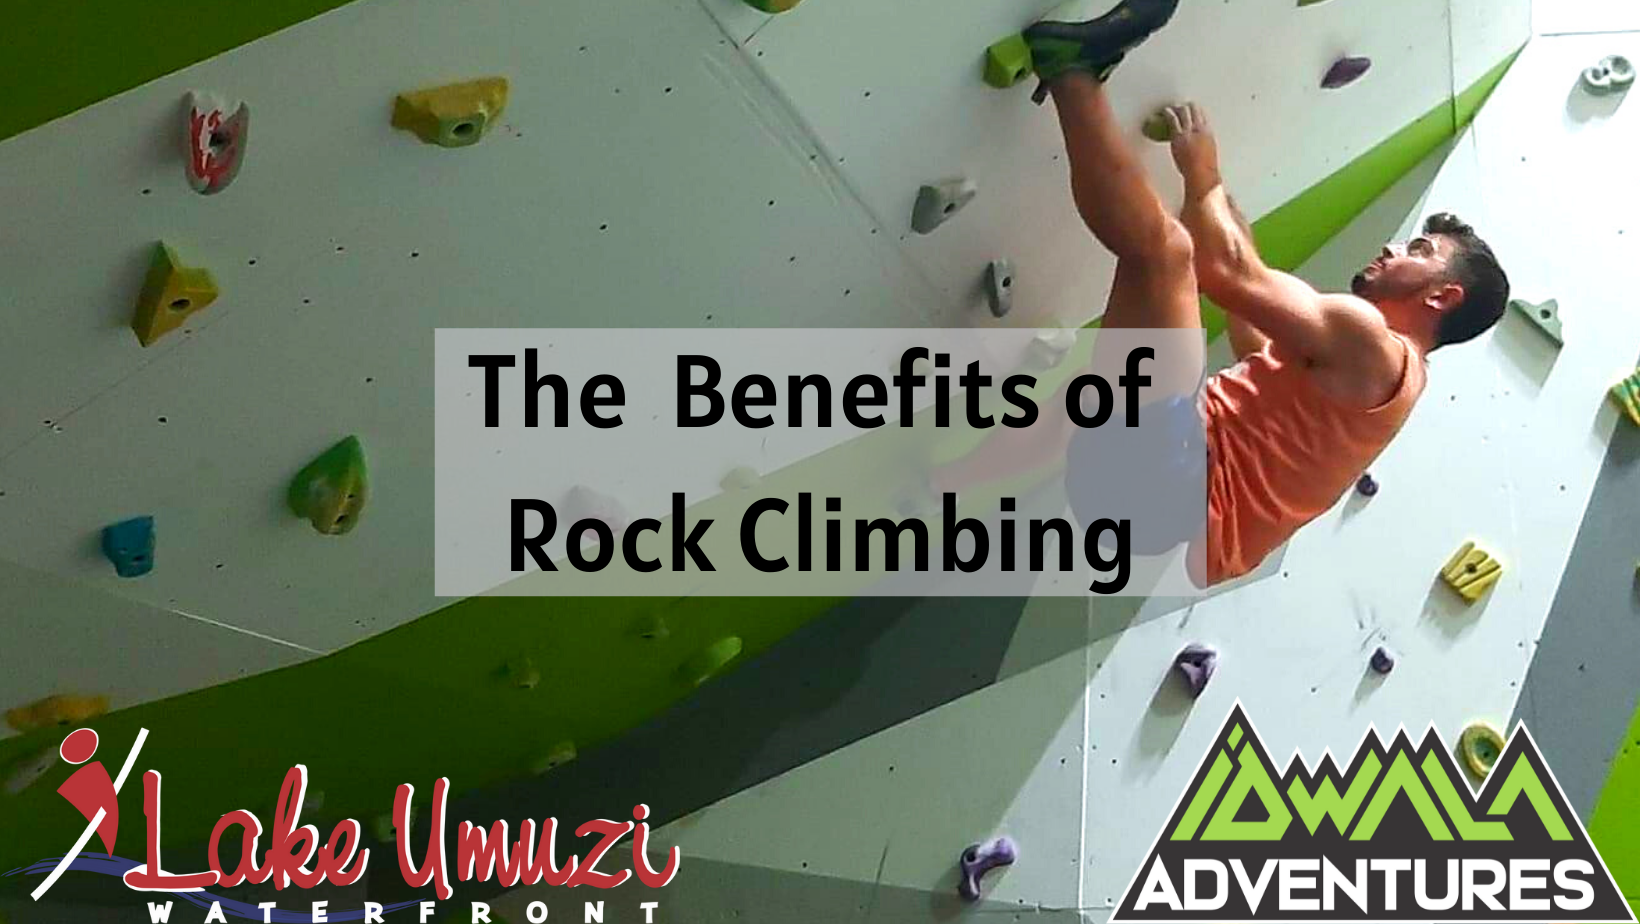 The Benefits of Rock Climbing